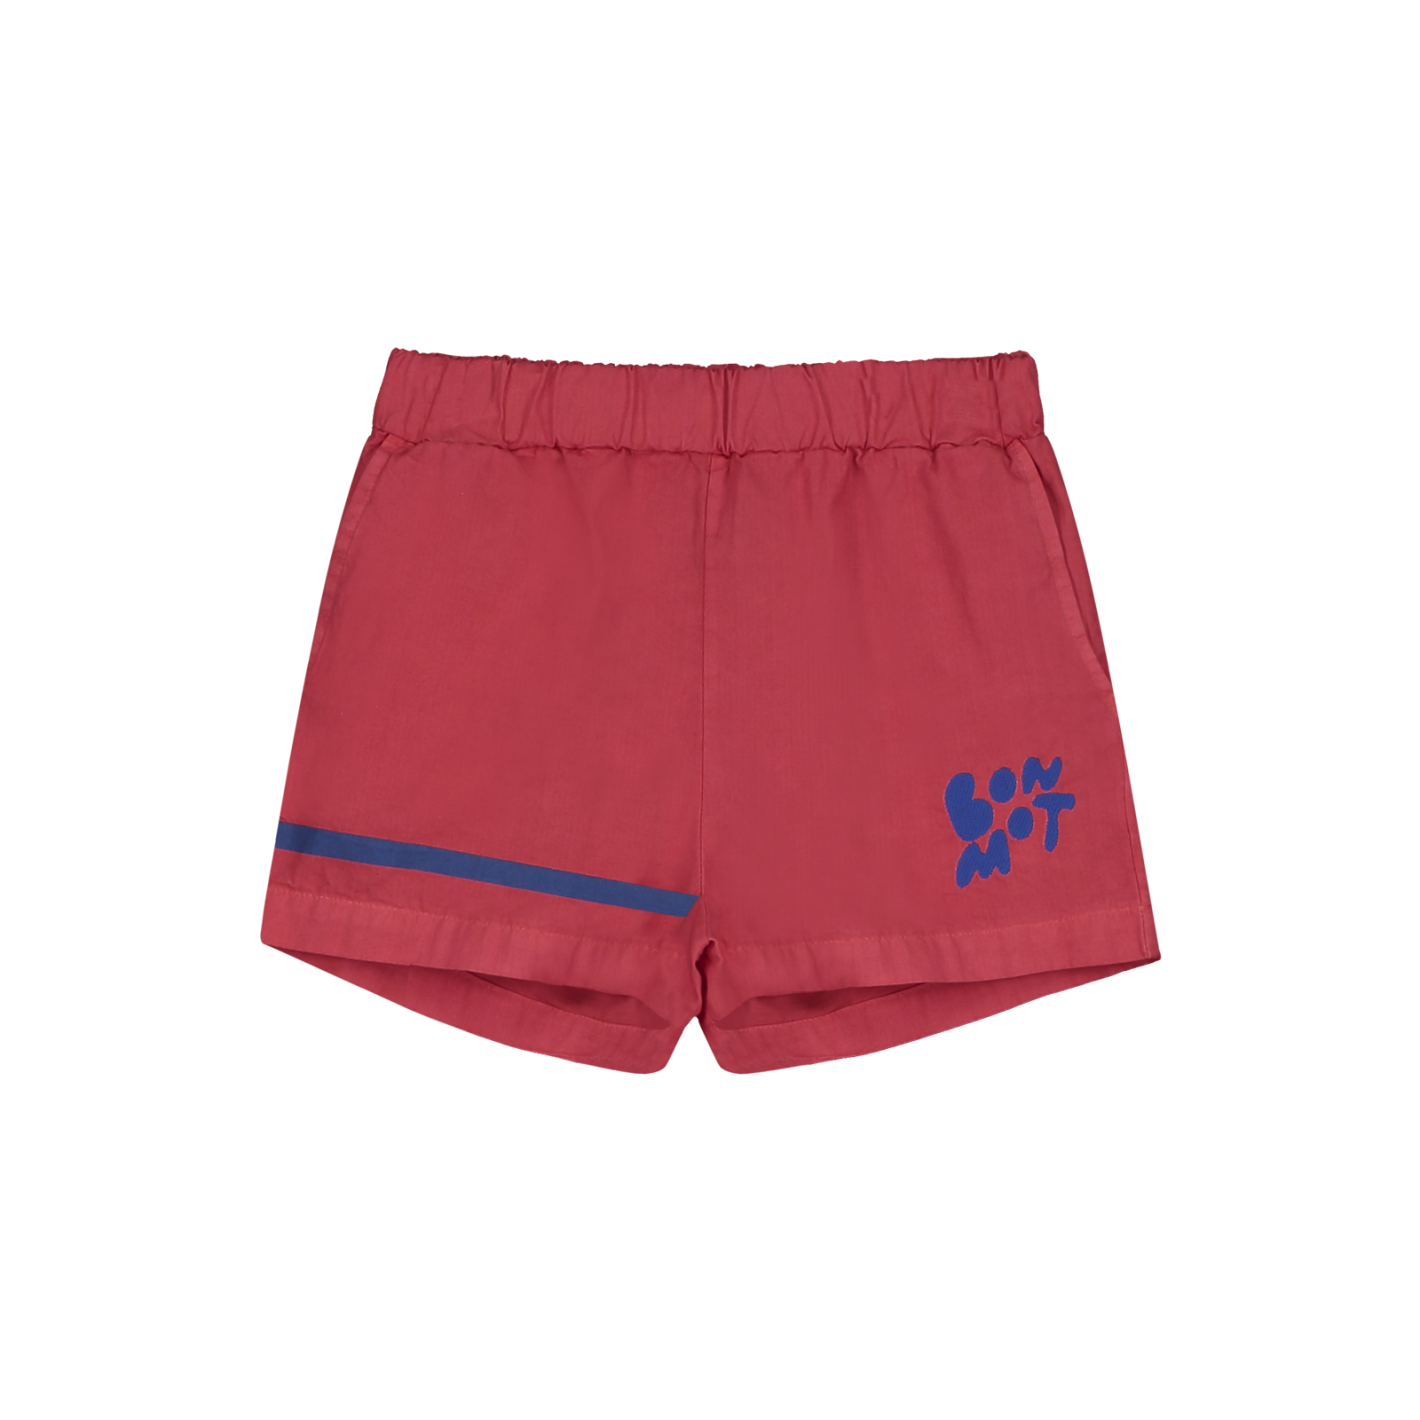 Bonmot - kids shorts - bottom stripe - red